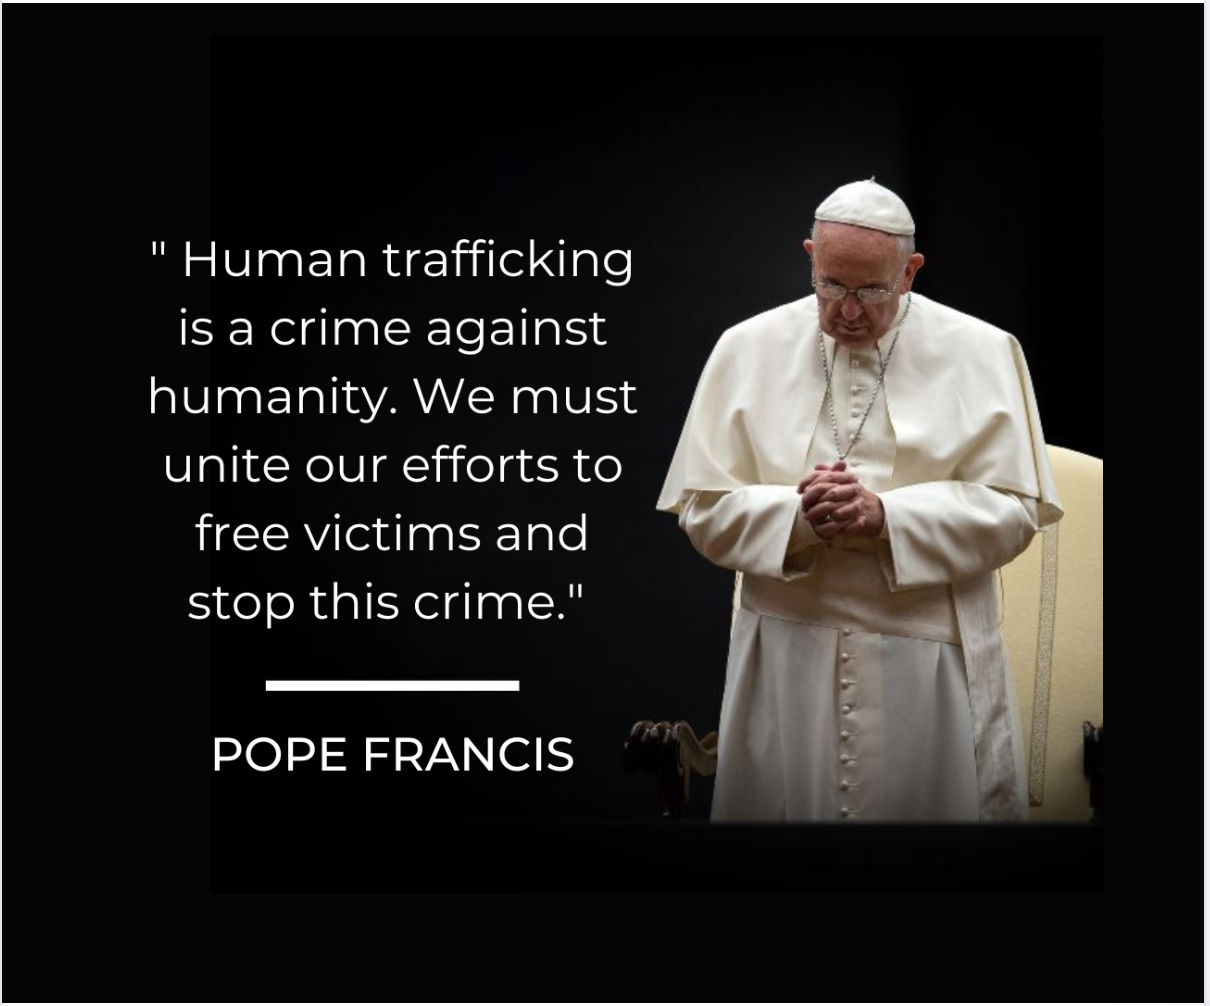 Citazione di Papa Francesco sulla tratta di esseri umani